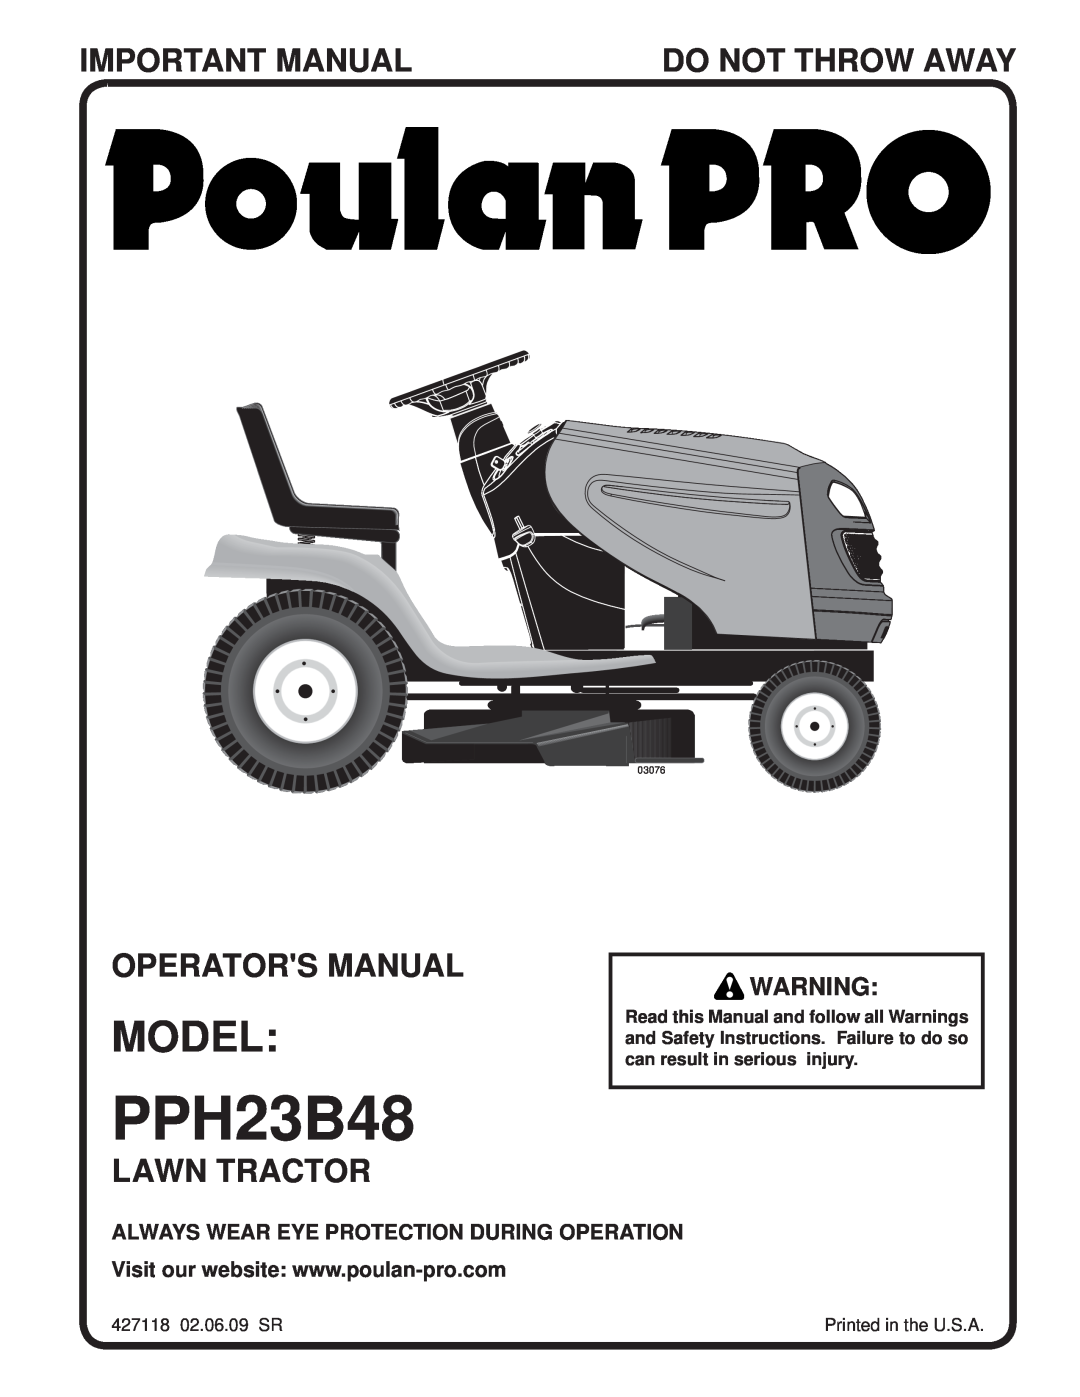 Poulan PPH23B48 manual Model, Important Manual, Do Not Throw Away, Operators Manual, Lawn Tractor, 03076 